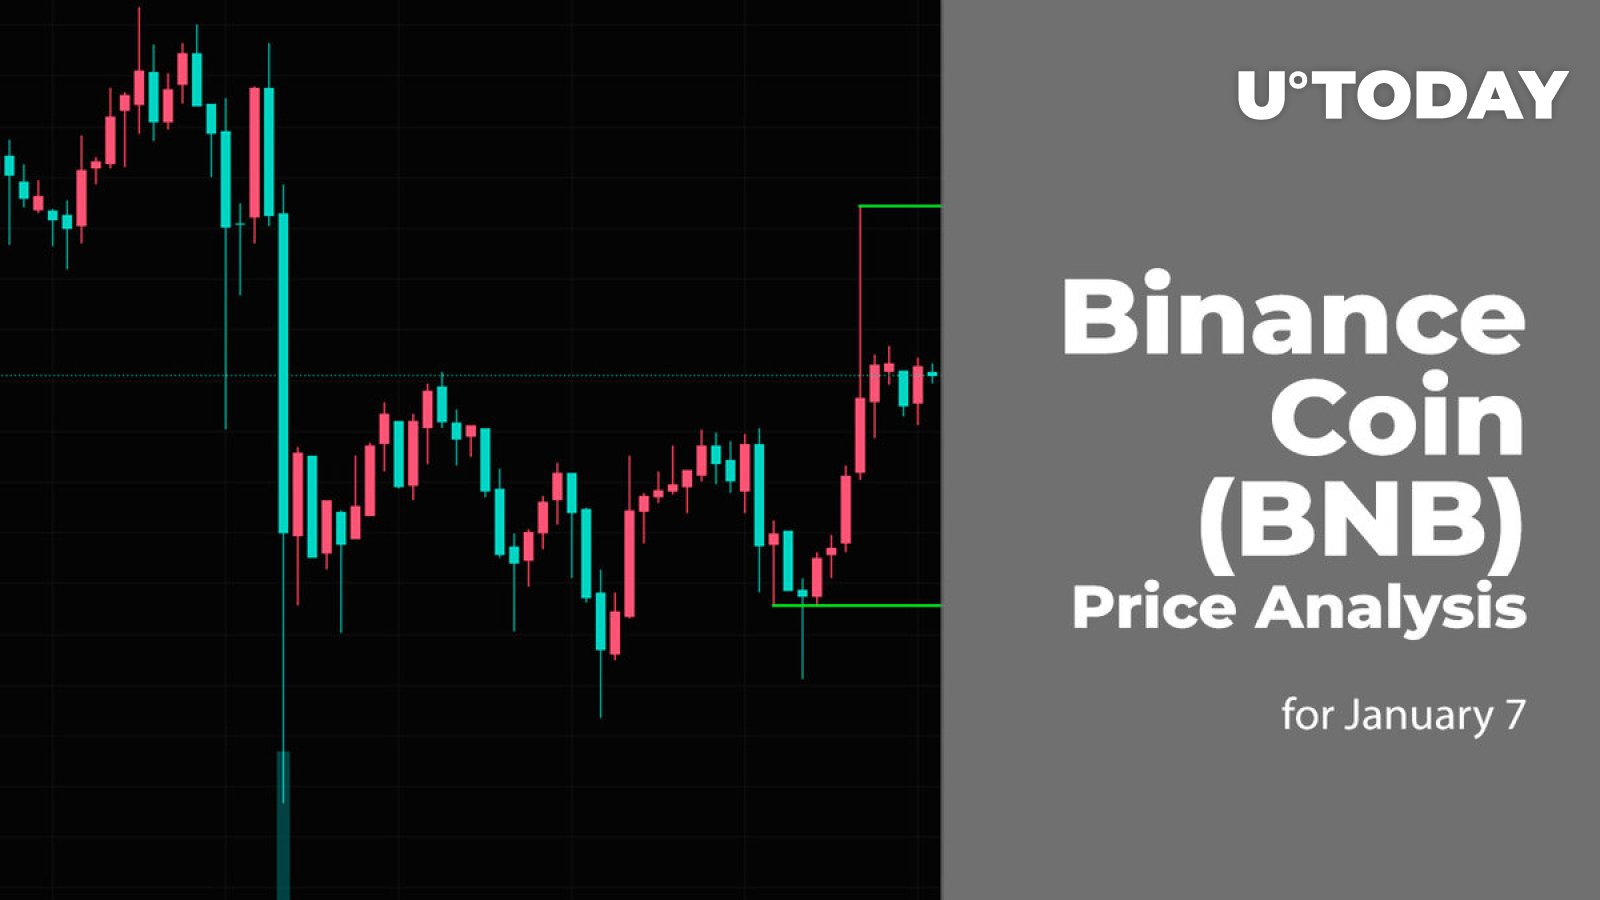 Binance Coin (BNB) Price Analysis for January 7